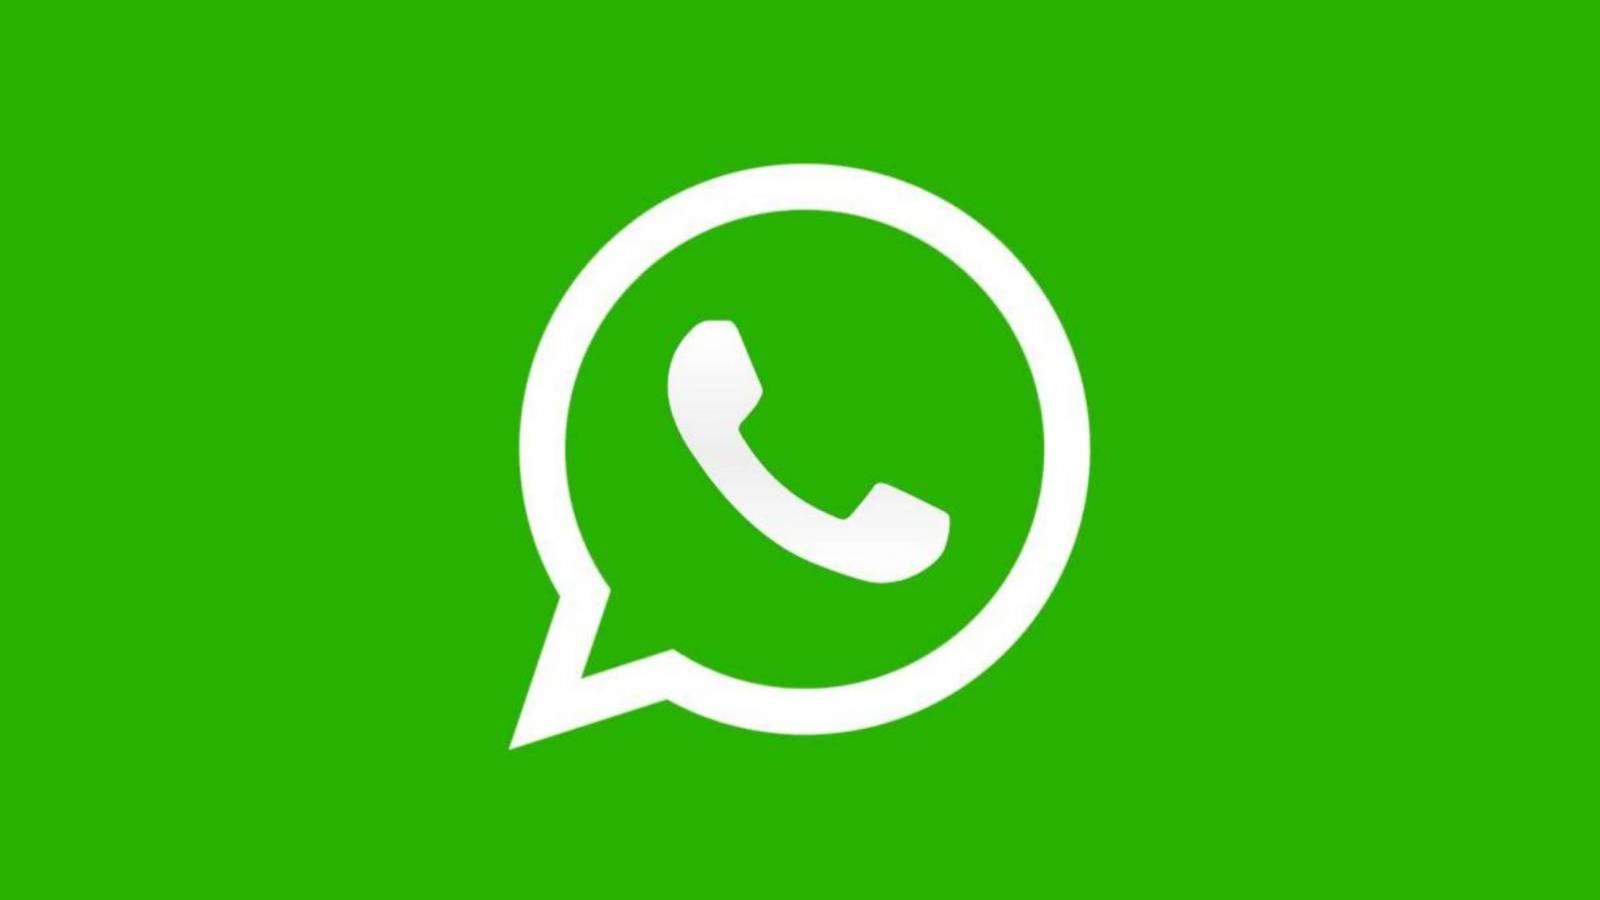 WhatsApp complaints